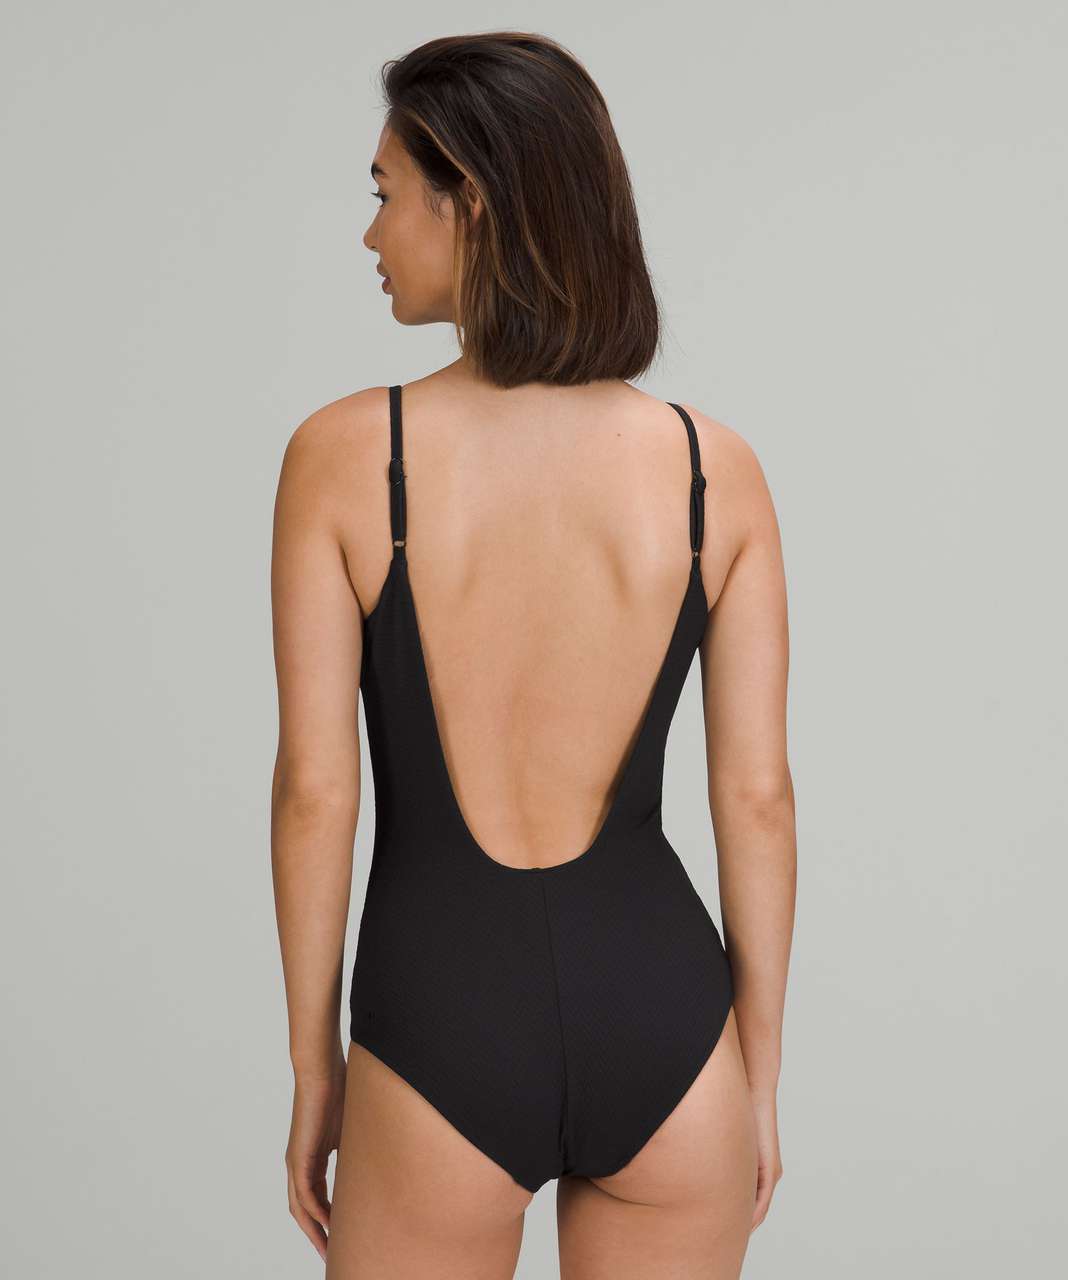 Black Swimsuit - Moderate Coverage Swimsuit - One-Piece Swimsuit - Lulus